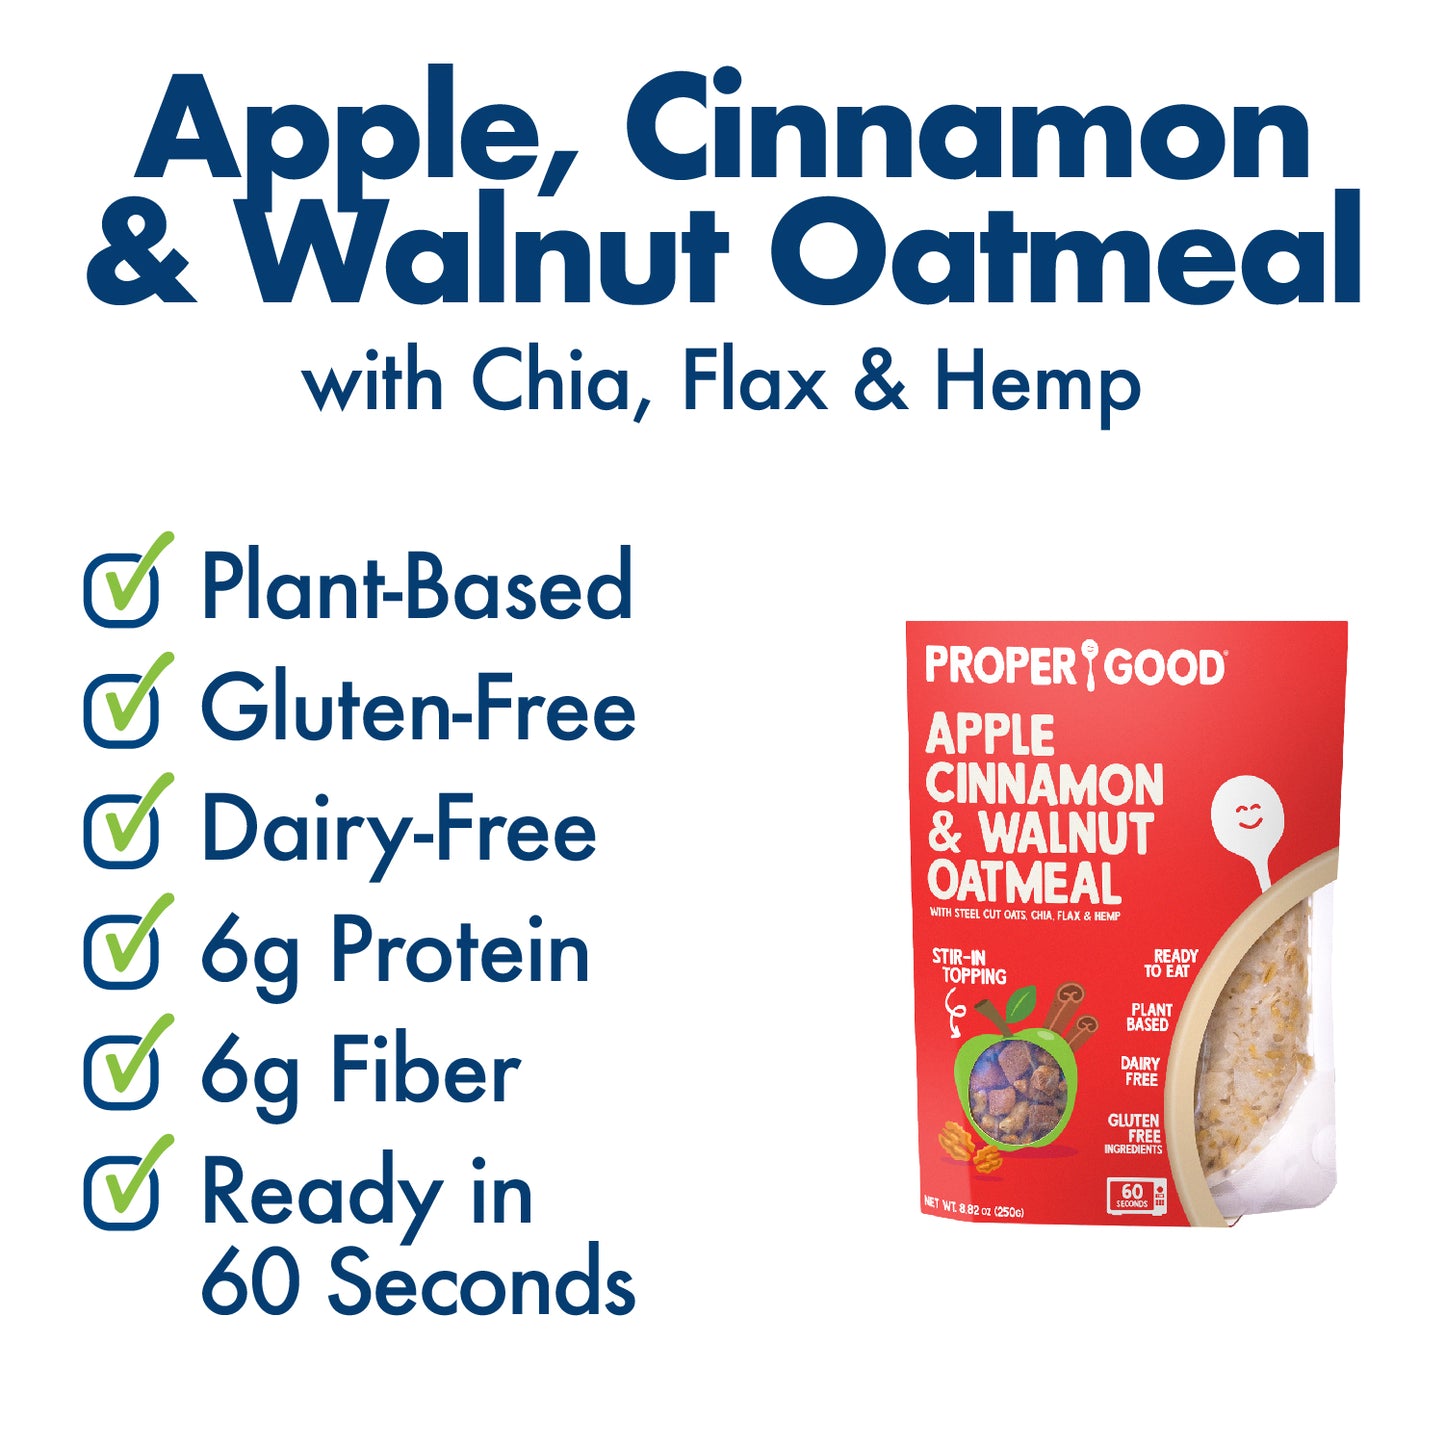 Apple, Cinnamon & Walnut Oatmeal Benefits - Eat Proper Good